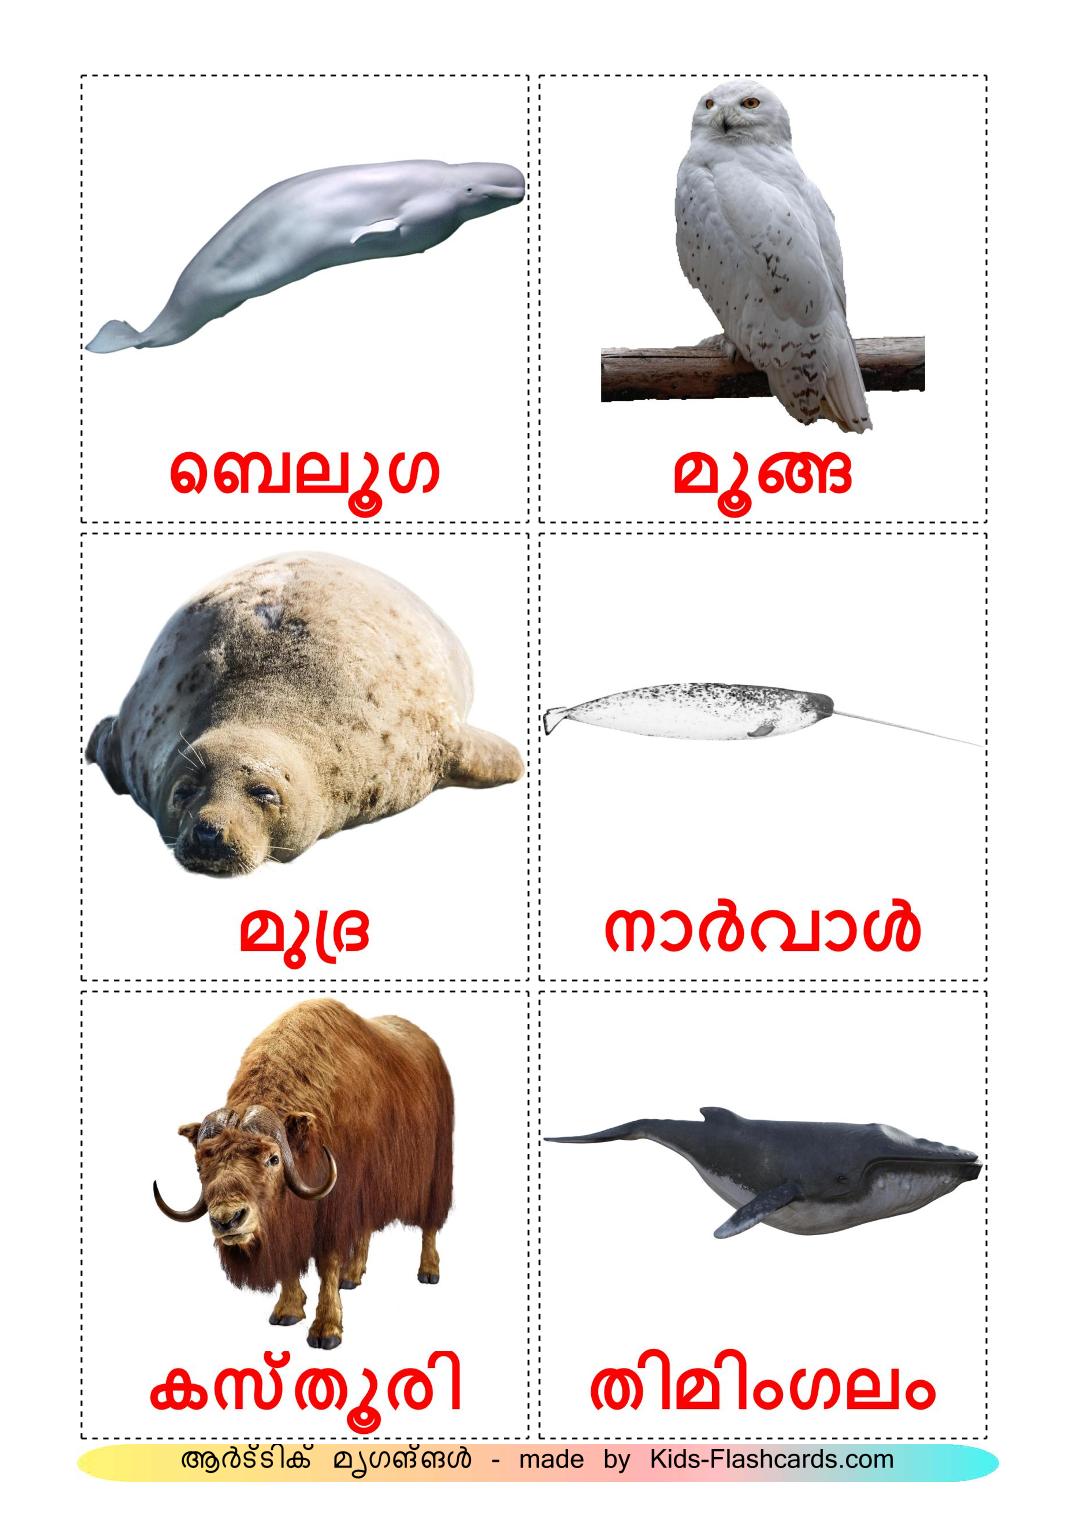 Animali artici - 14 flashcards malayalam stampabili gratuitamente